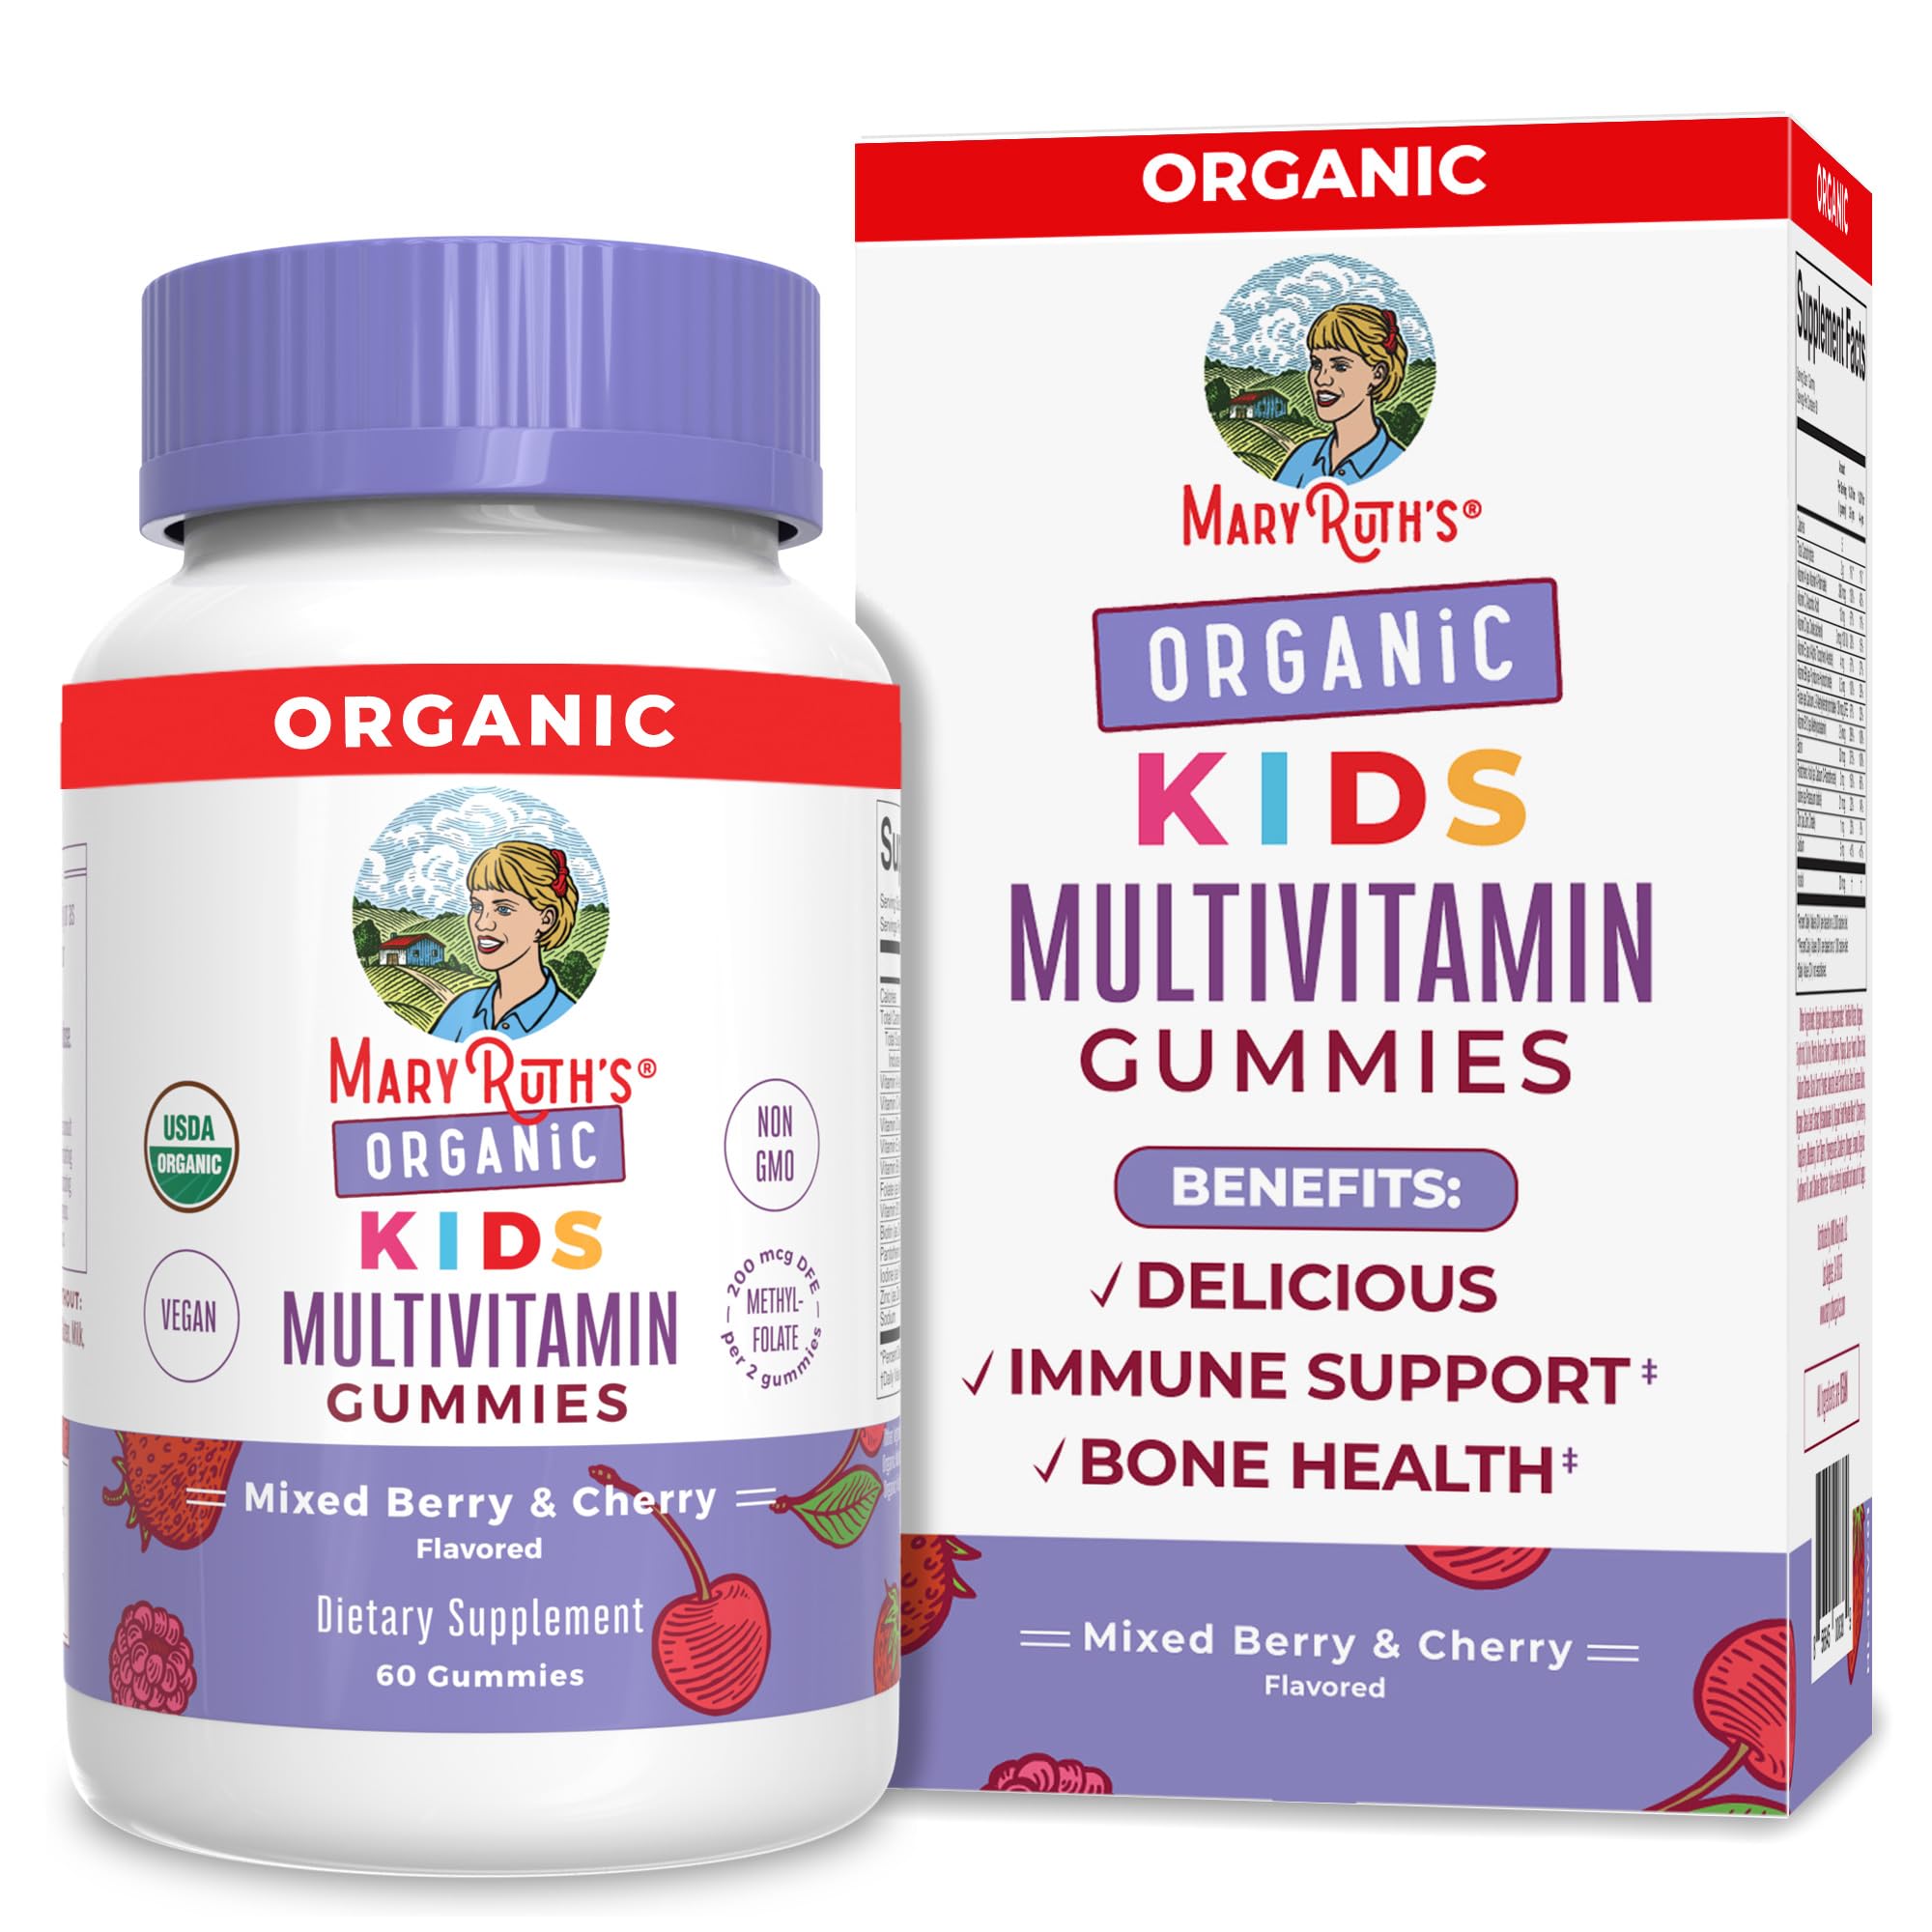 MaryRuth's Kids Multivitamin Gummies, Toddler Multivitamin Gummies, and Kids Probiotic Gummies, 3-Pack Bundle for Immune Support, Bone Health, Digestive & Gut Health, & Overall Health, Vegan, Non-GMO